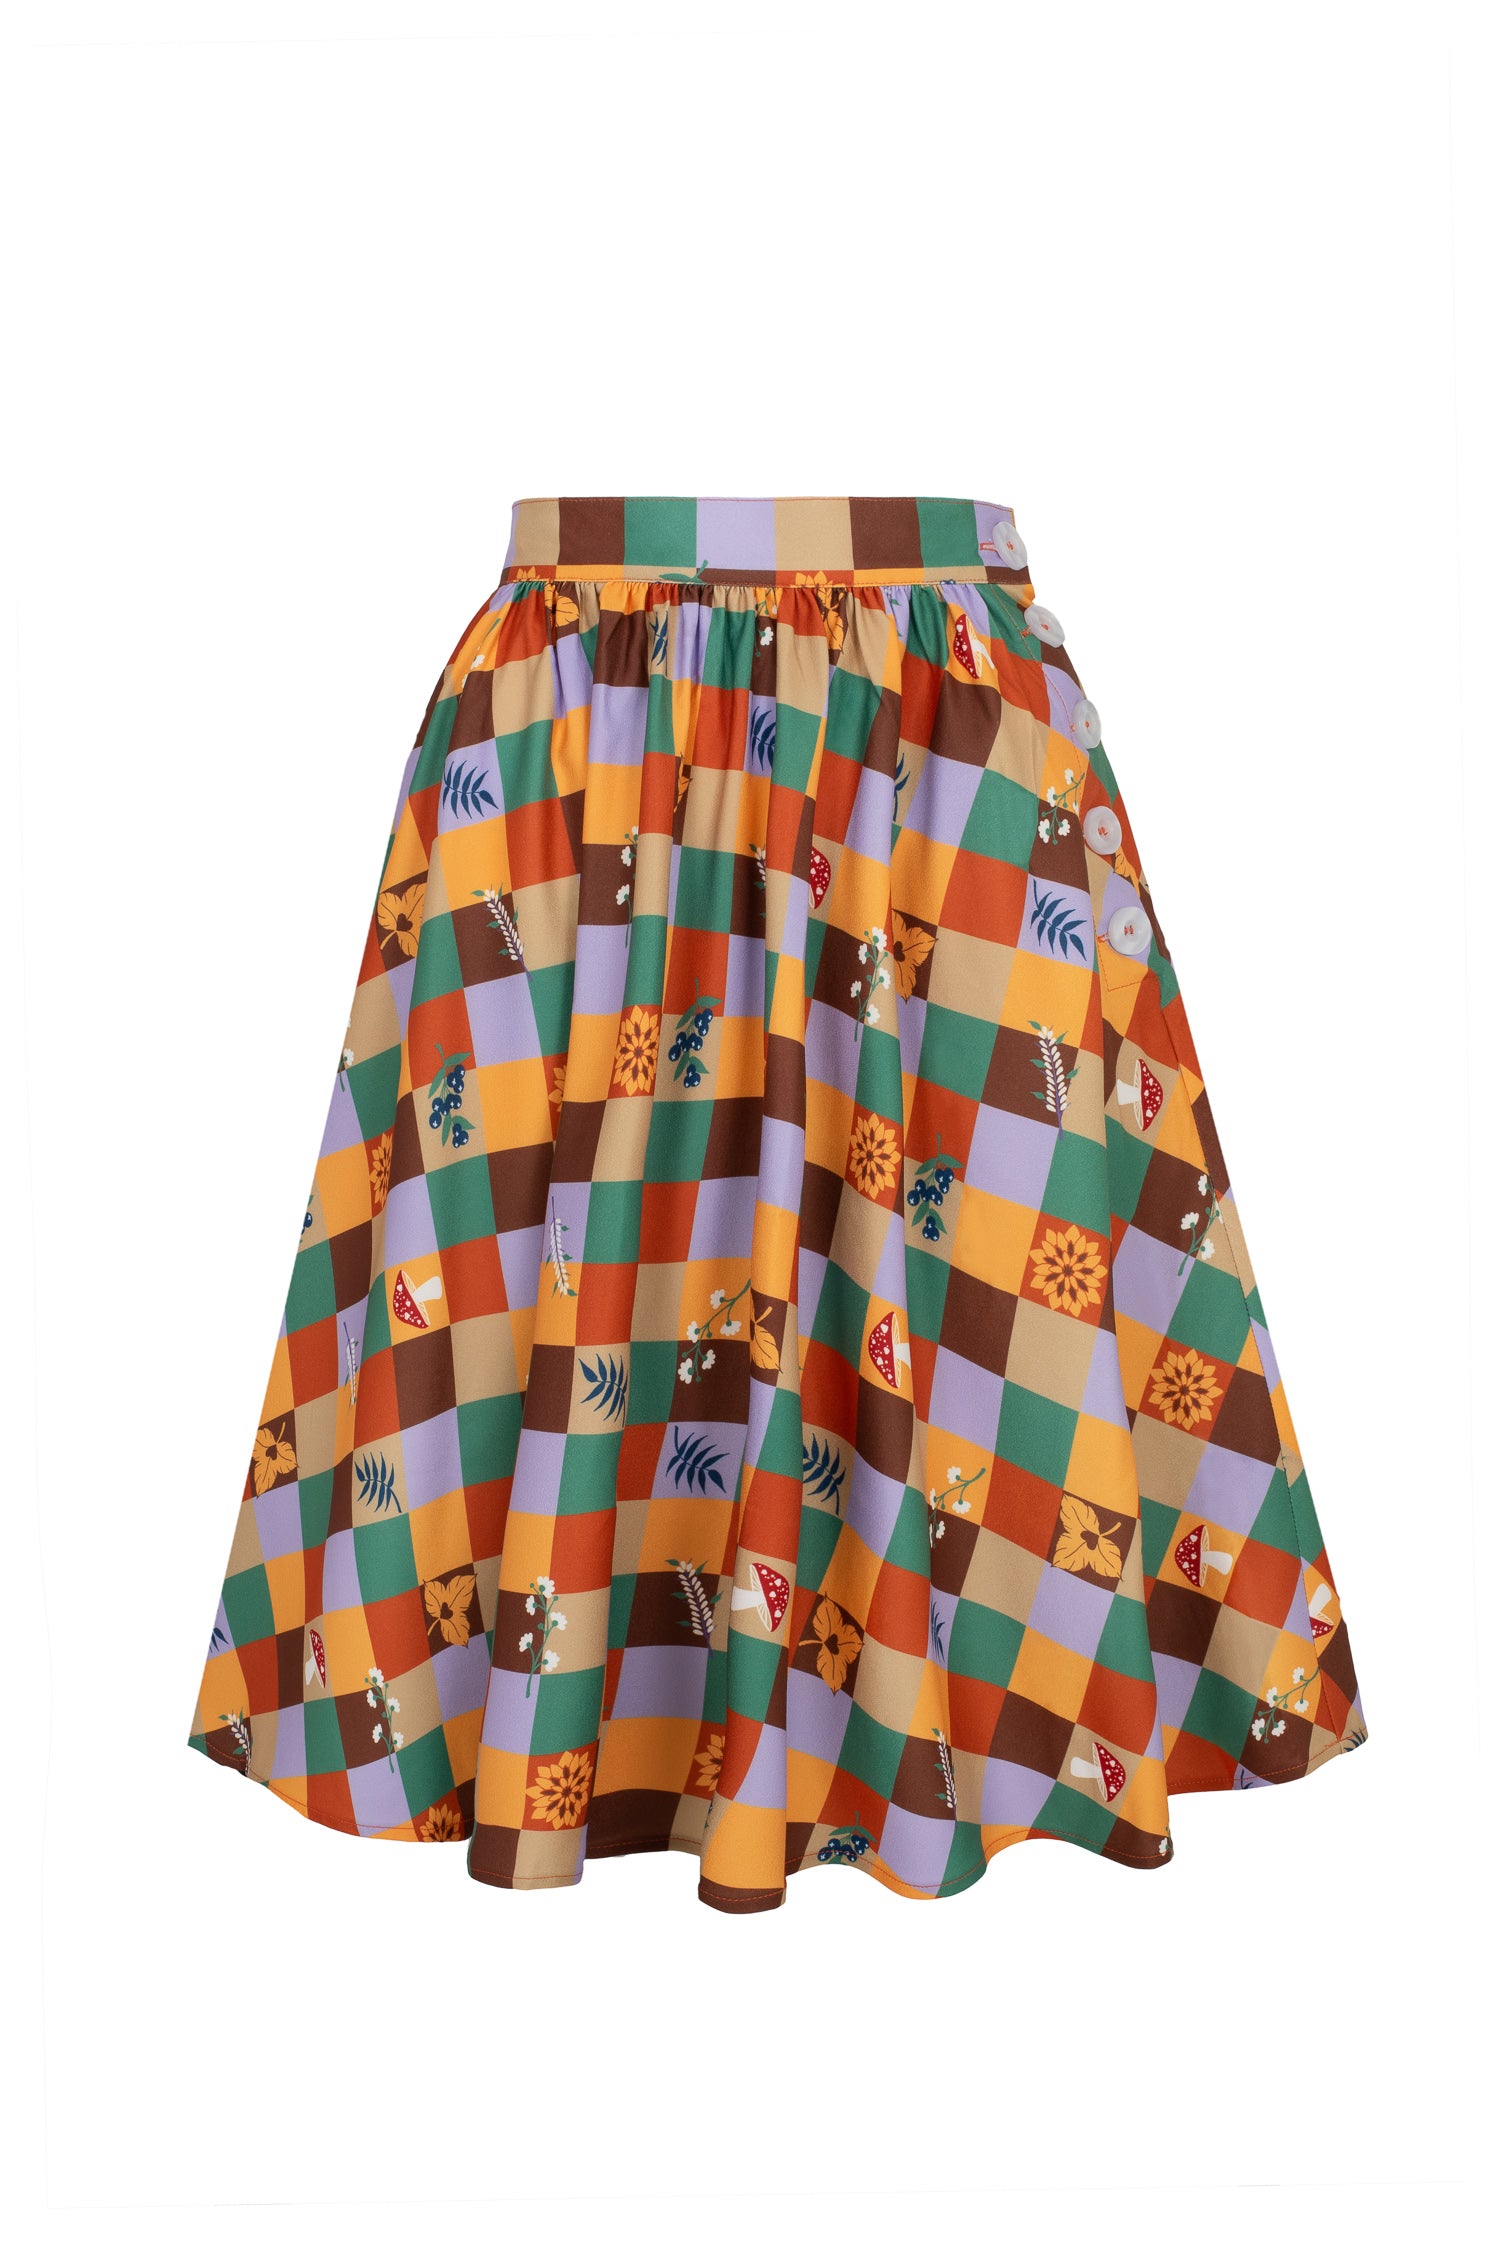 Hawthorn Skirt